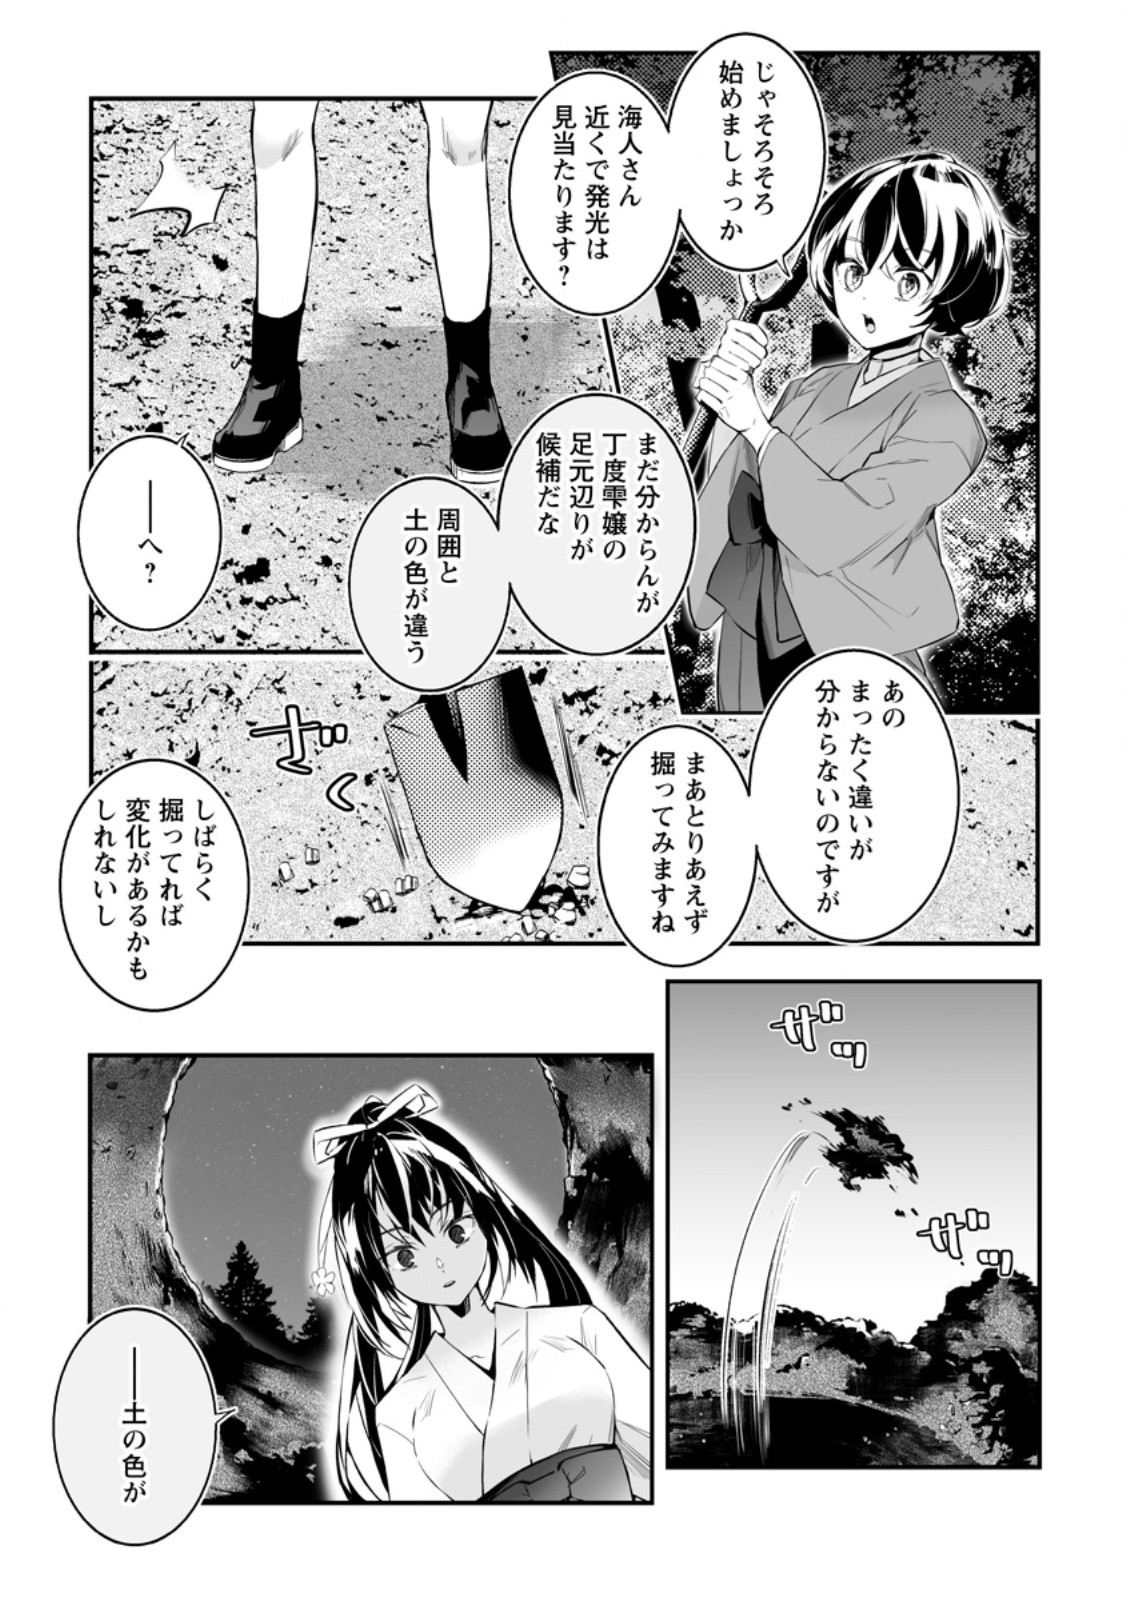 Hakui no Eiyuu - Chapter 35.2 - Page 9